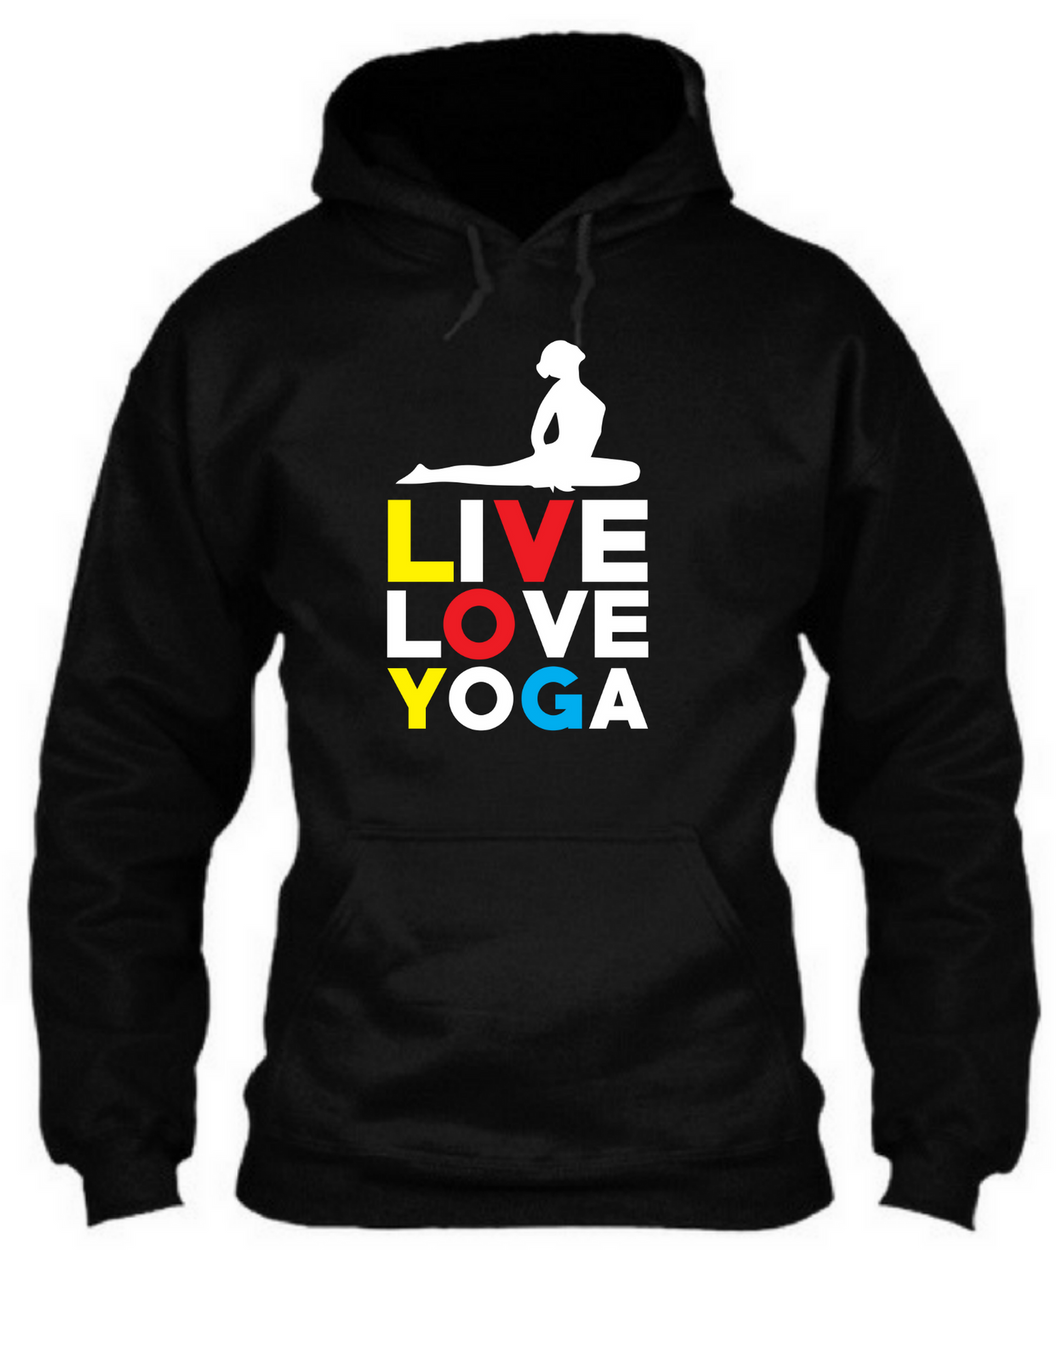 Live love yoga - Unisex Hoodie